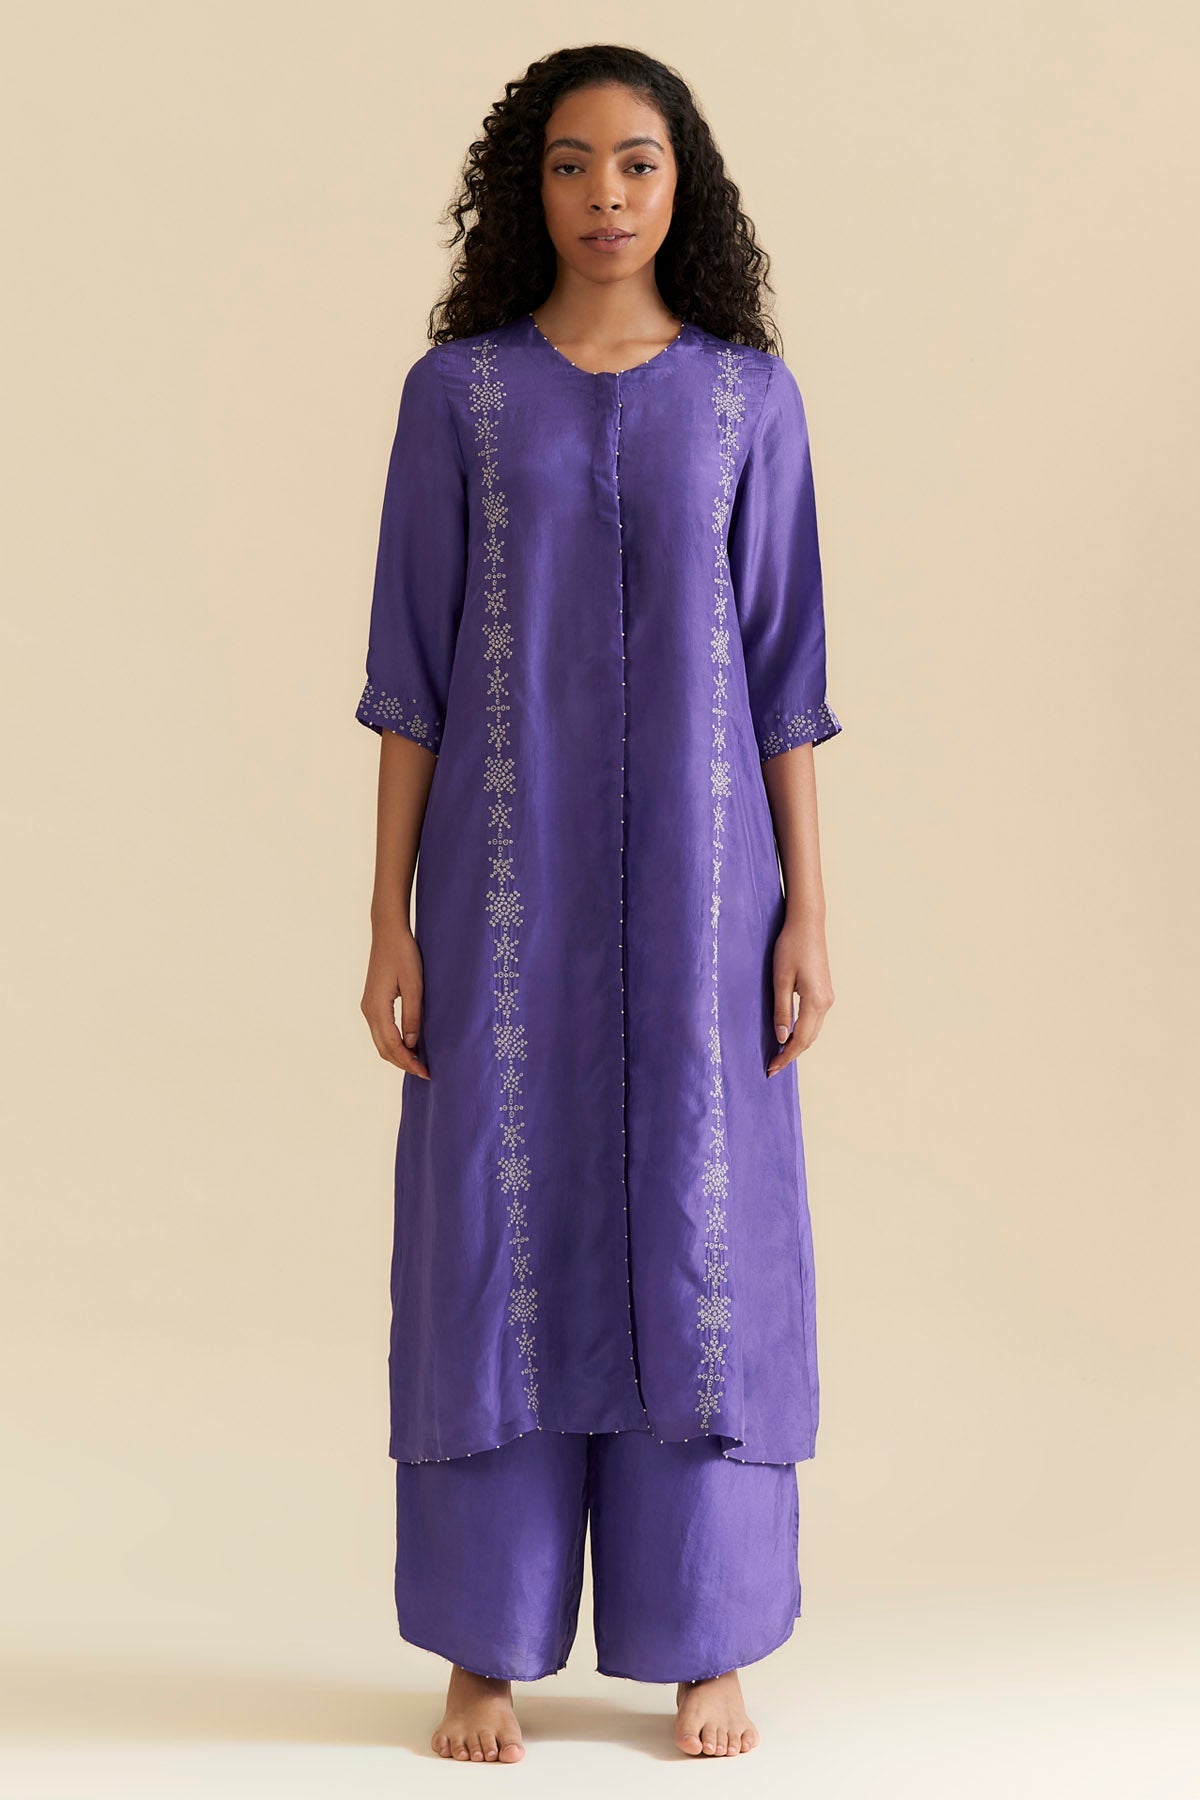 Srota by Srishti Aggarwal Embroidered Purple Kurta Set for women online at ScrollnShops